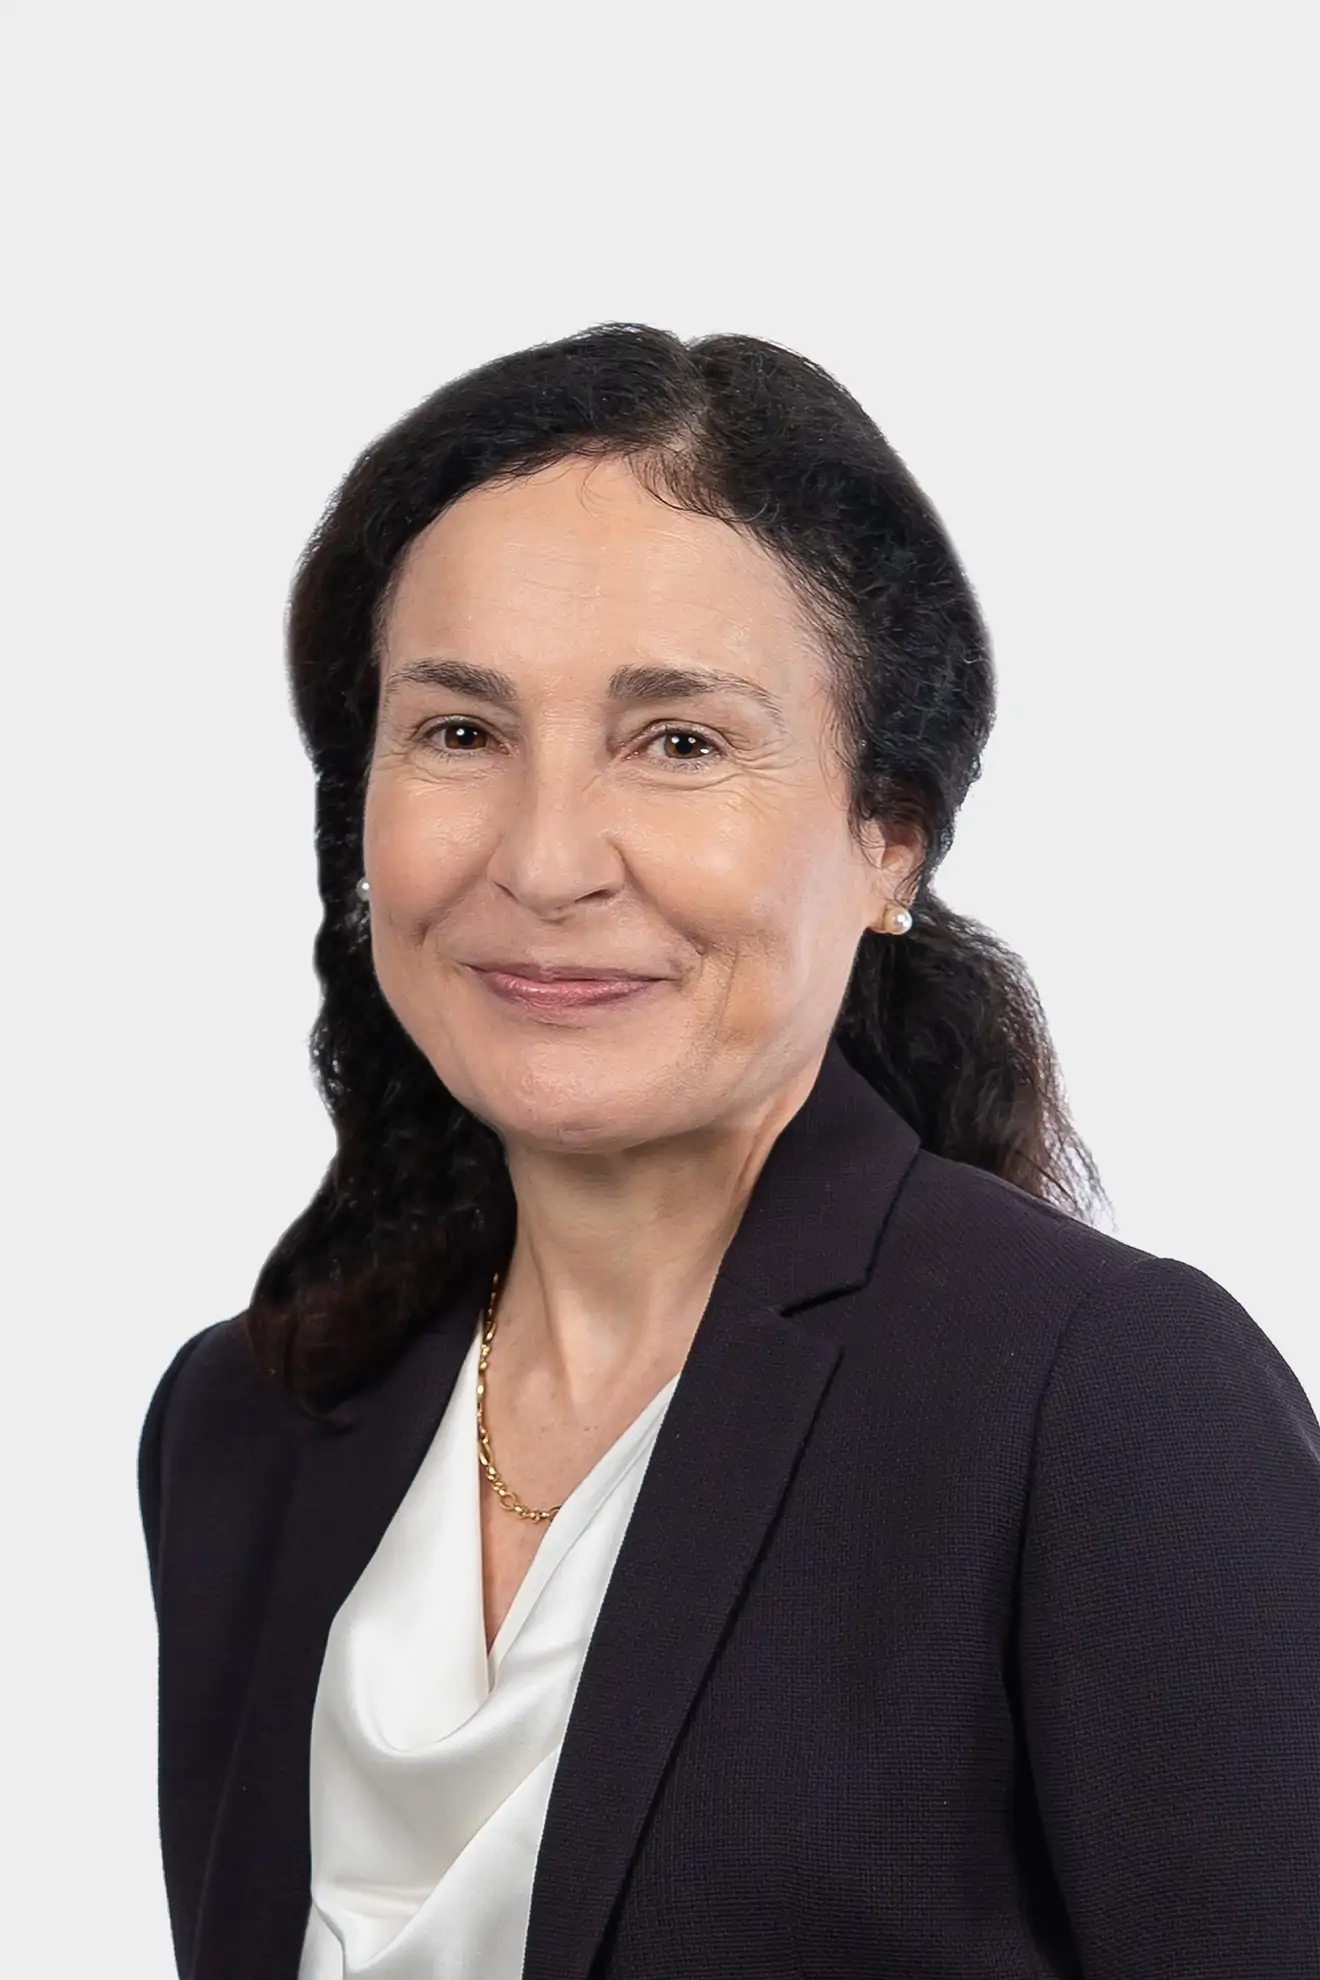 Maria Soler Nunez, Member of the Executive Committee